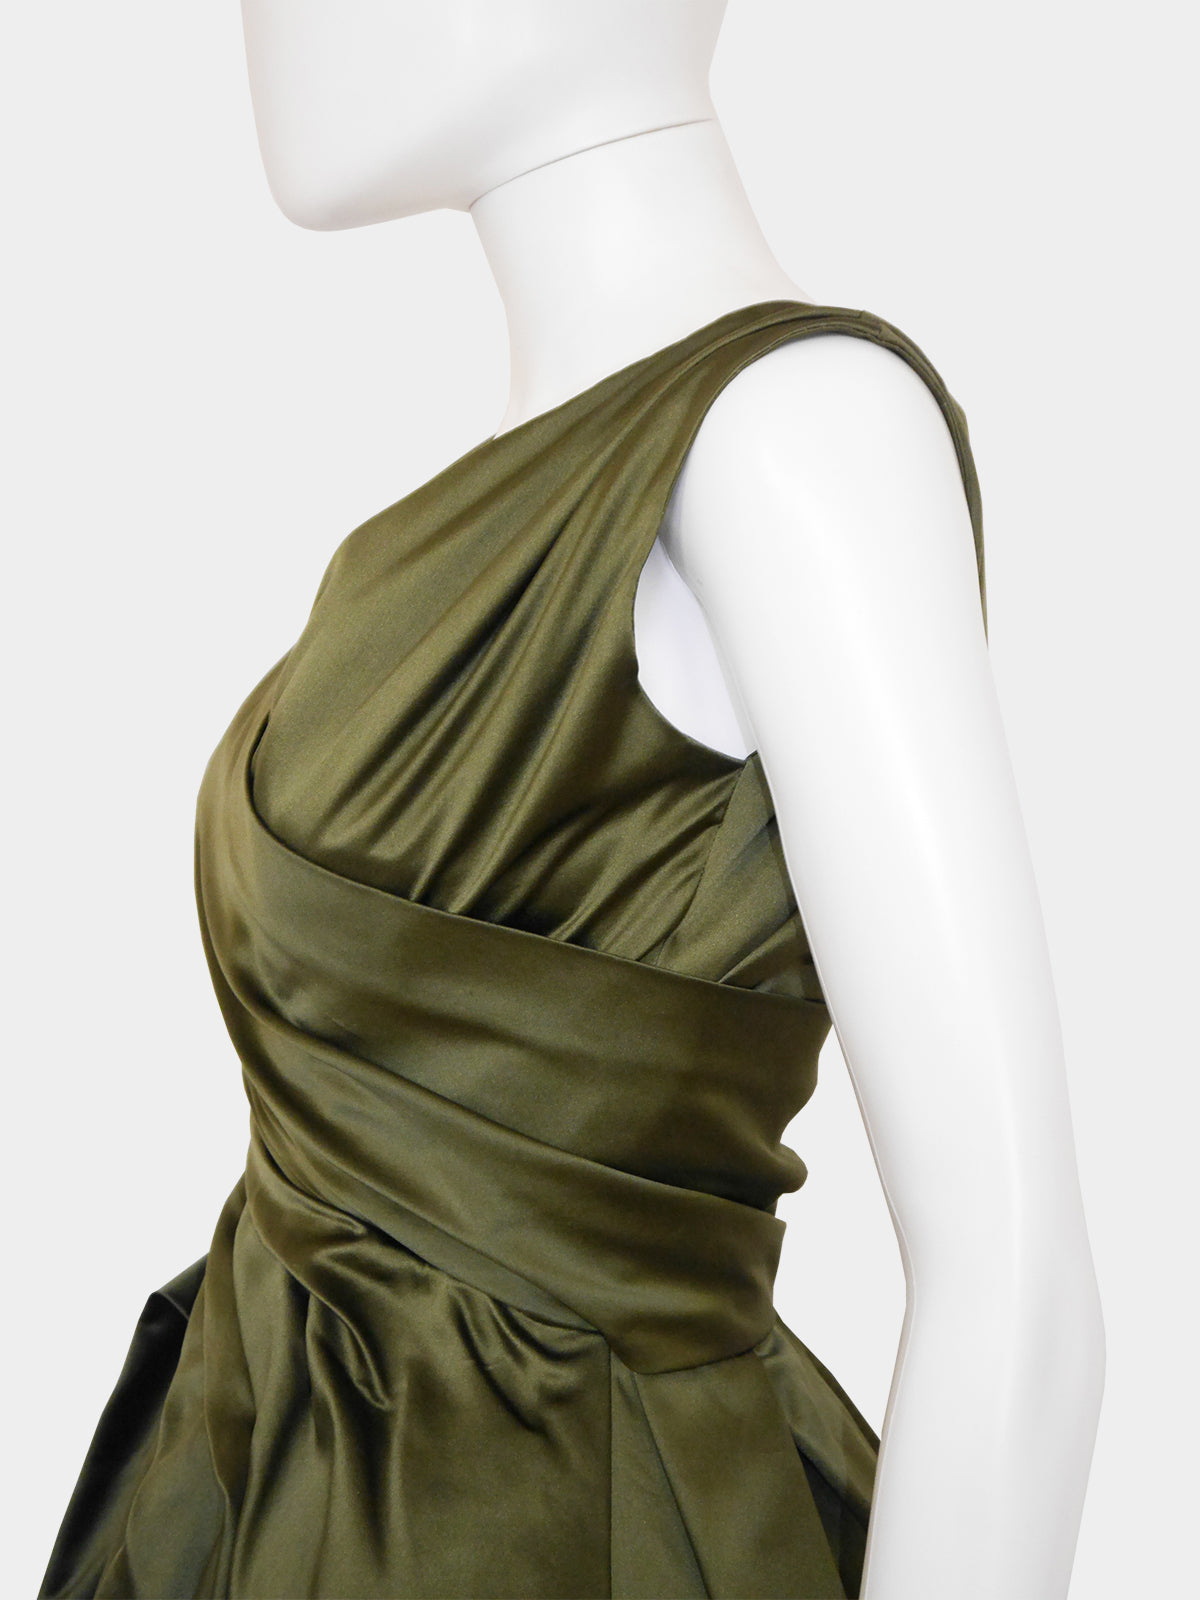 CHRISTIAN DIOR Fall 1957 Haute Couture "Venezuela" Draped Silk Evening Dress Size XXS-XS